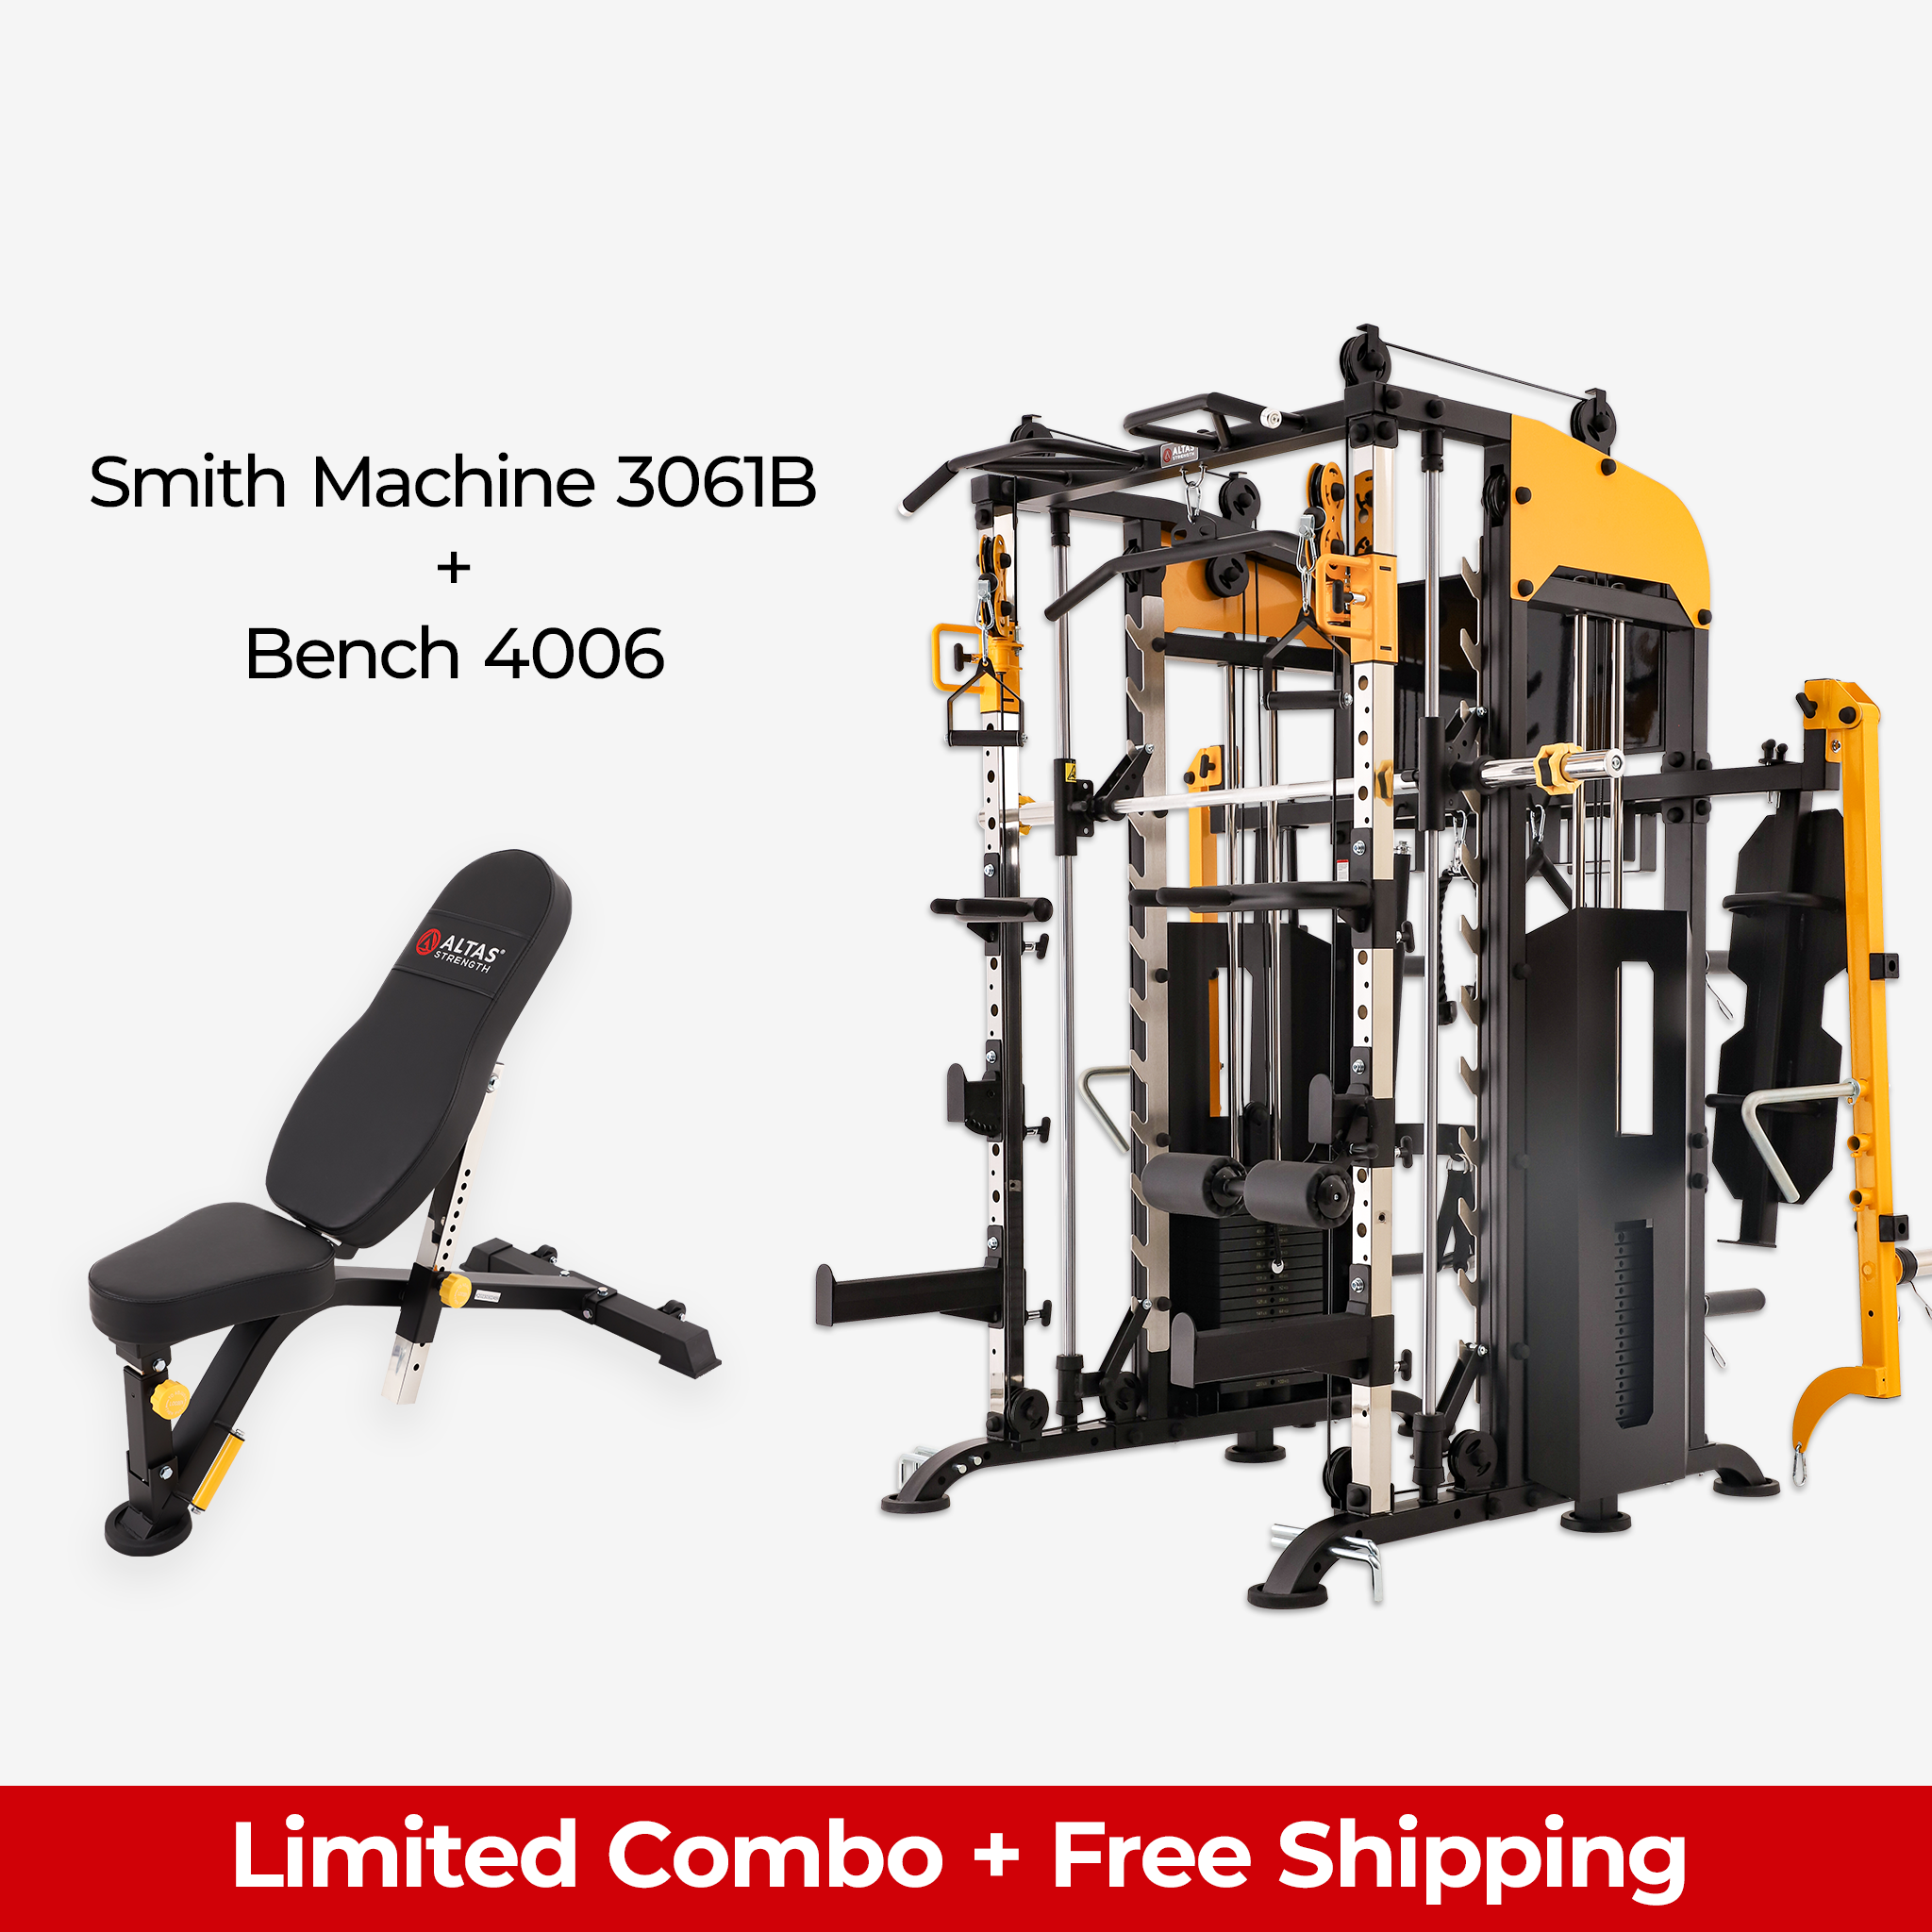 Limited Combo - Smith Machine AL-3061B + Bench 4006